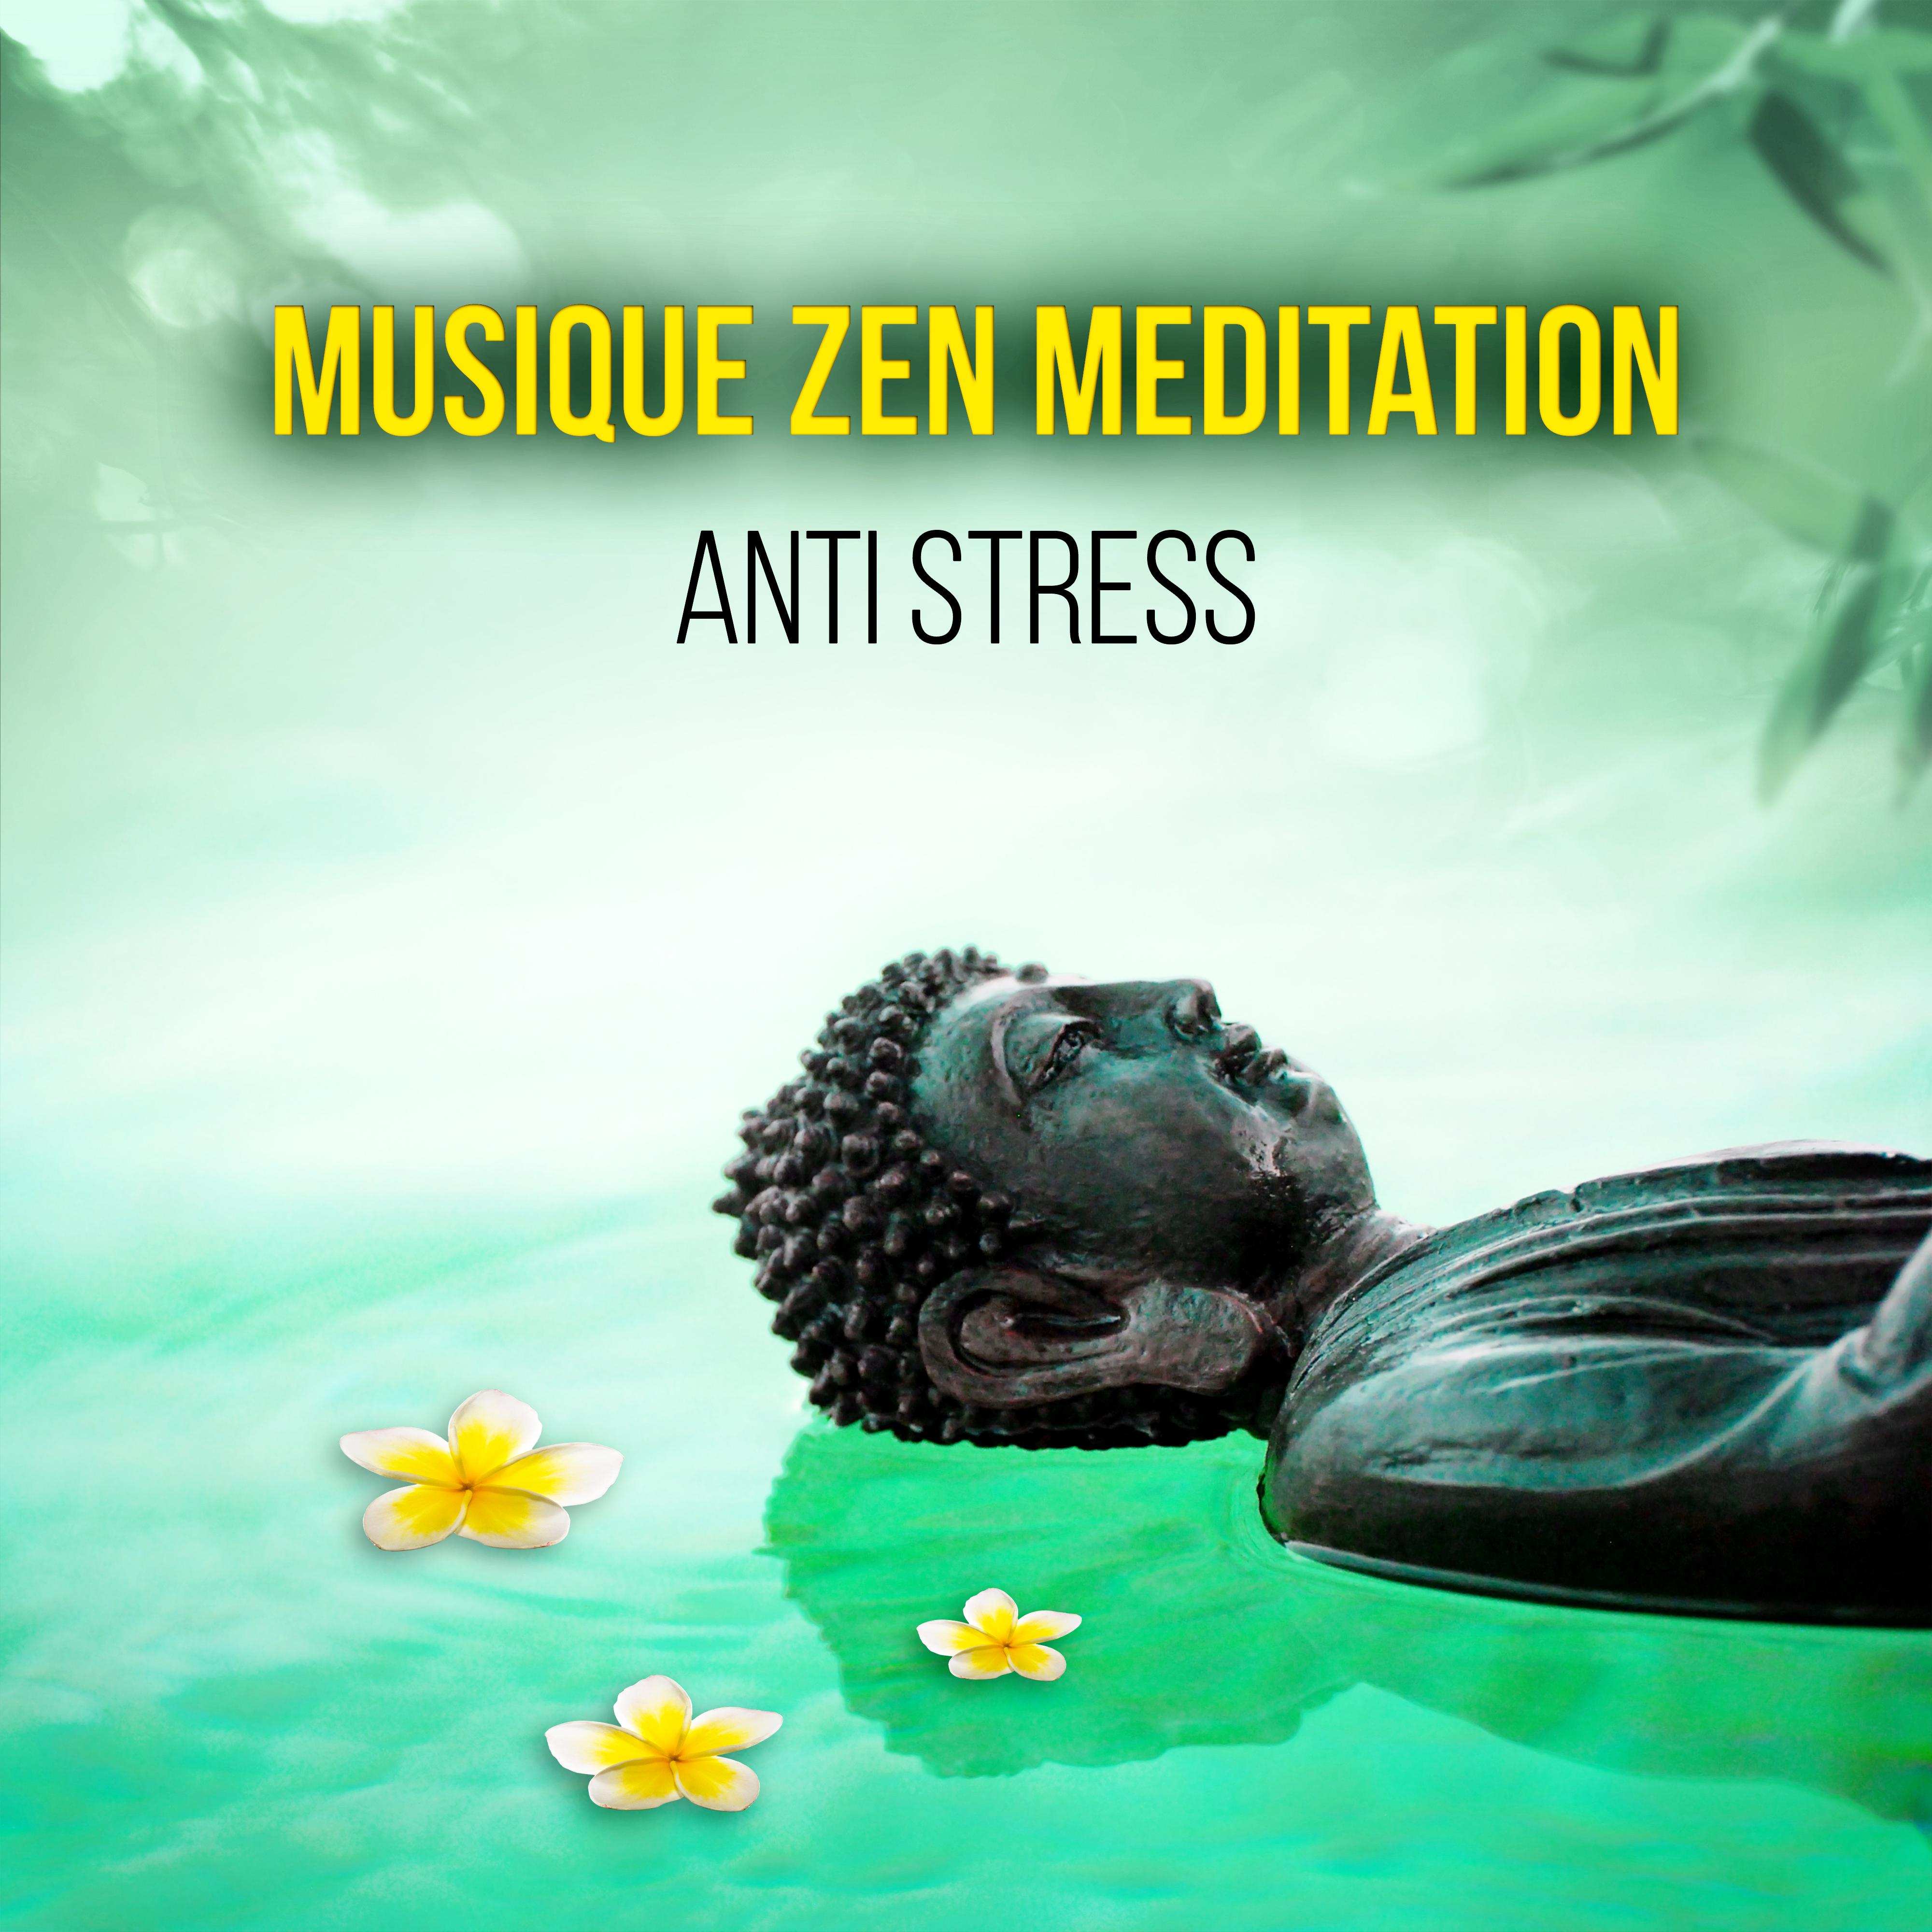 Musique zen meditation